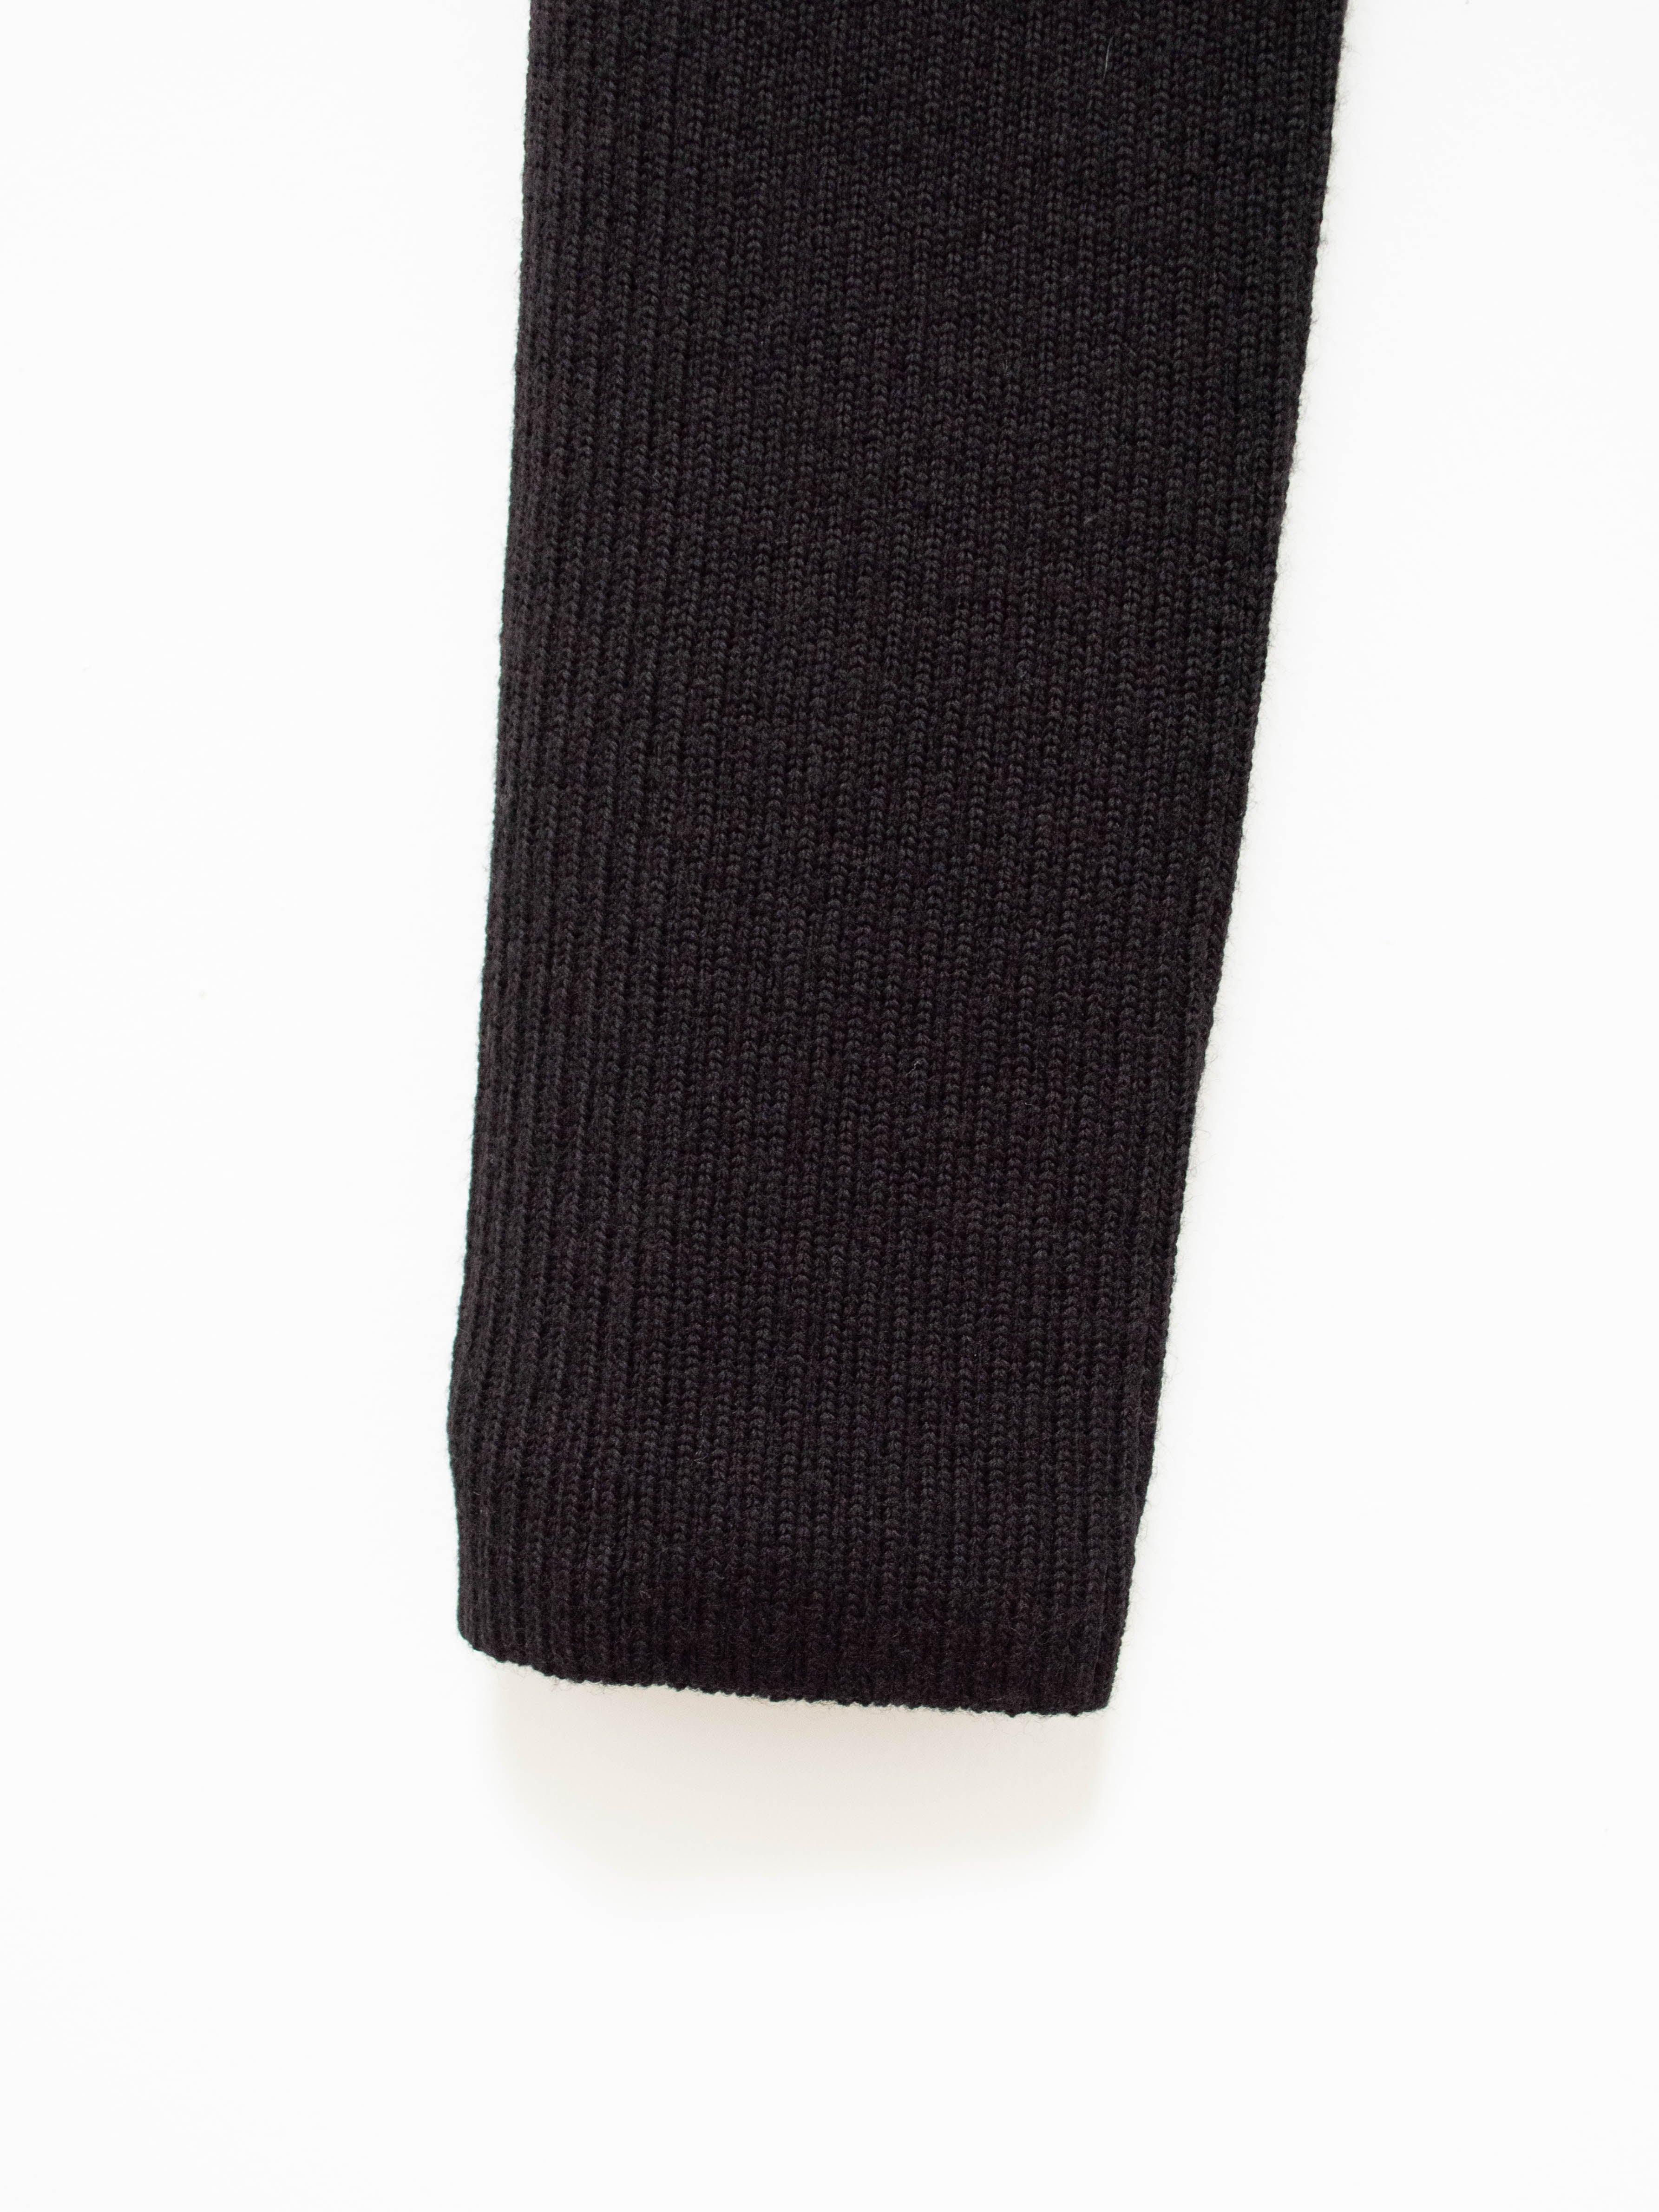 Namu Shop - Phlannel Worsted Wool Knit Rib Pants - Black